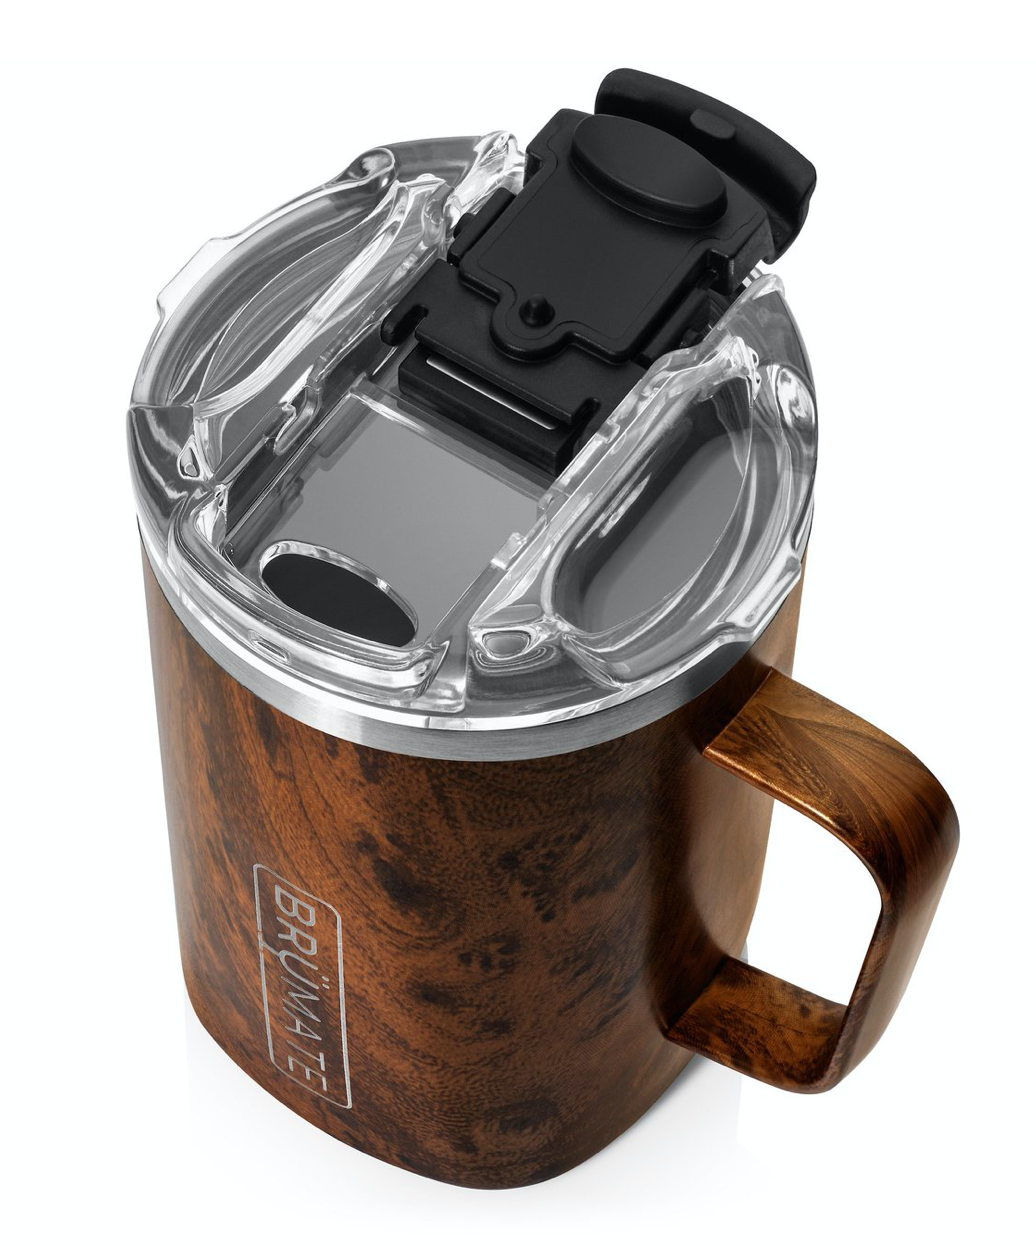 Corkcicle 16 oz. Coffee Mug in Walnut